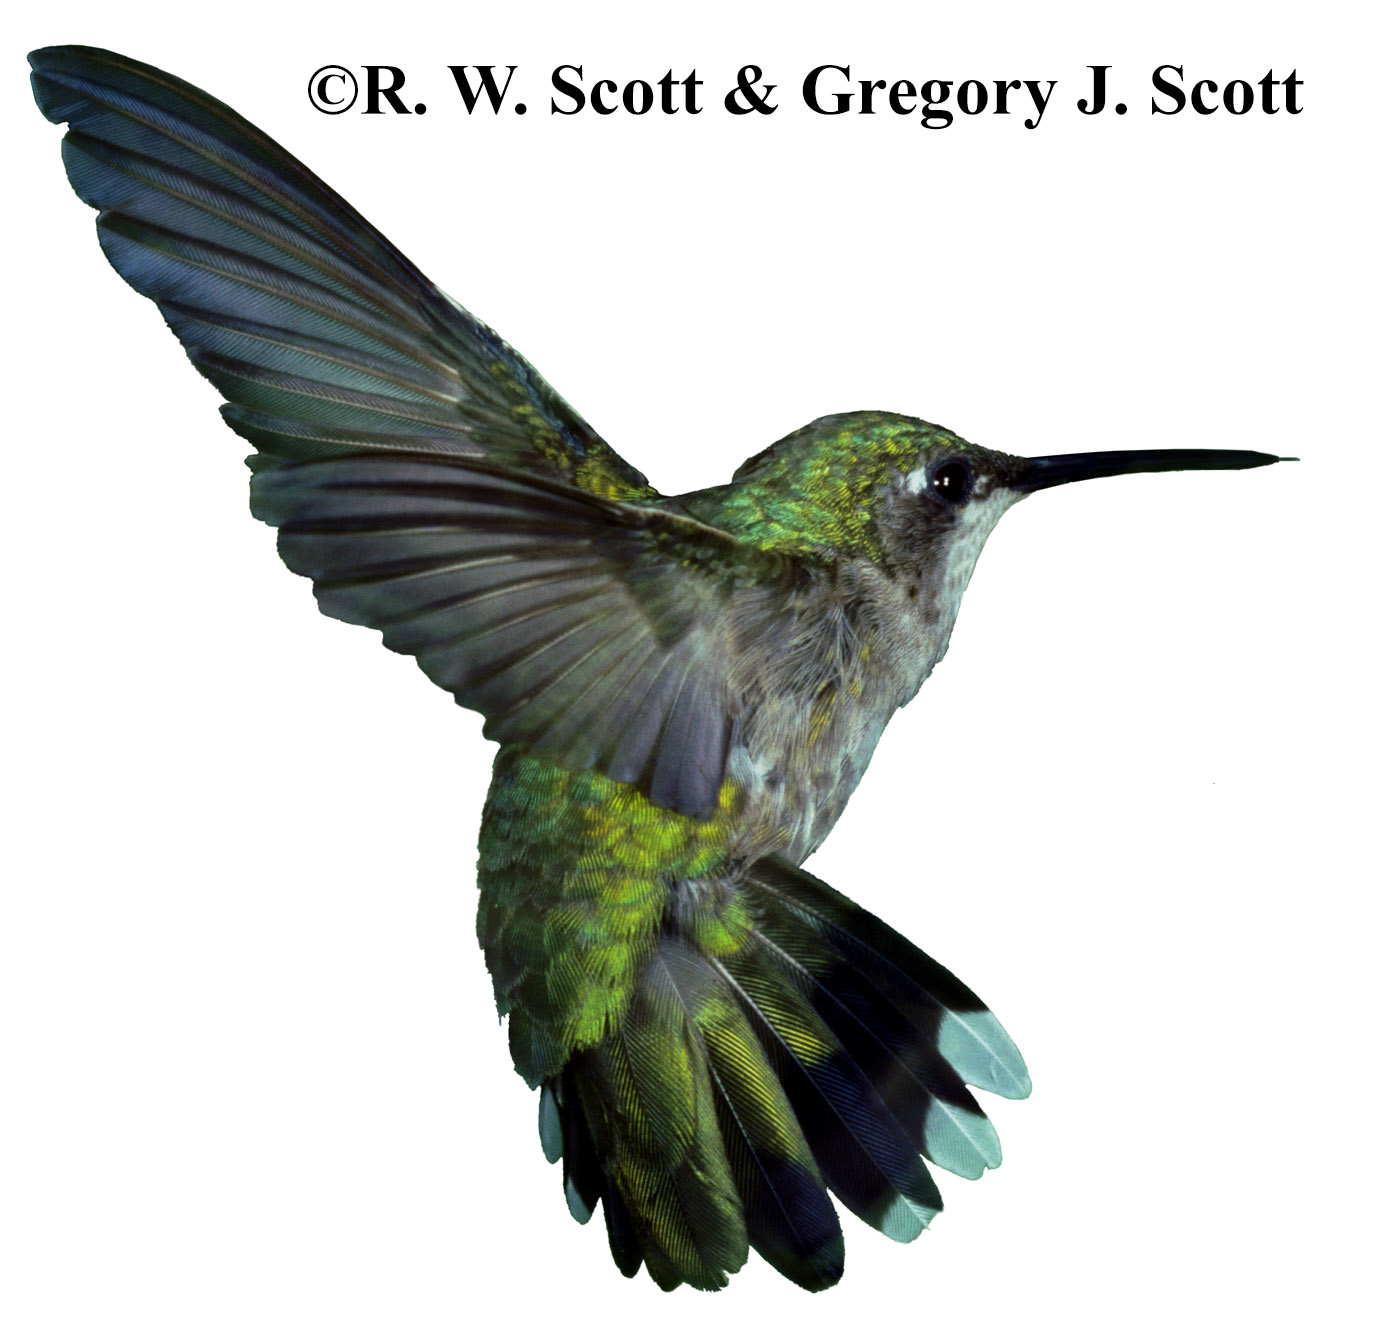 Sexto single >> 'The One That Got Away' - Página 19 Rwscott.hummingbird